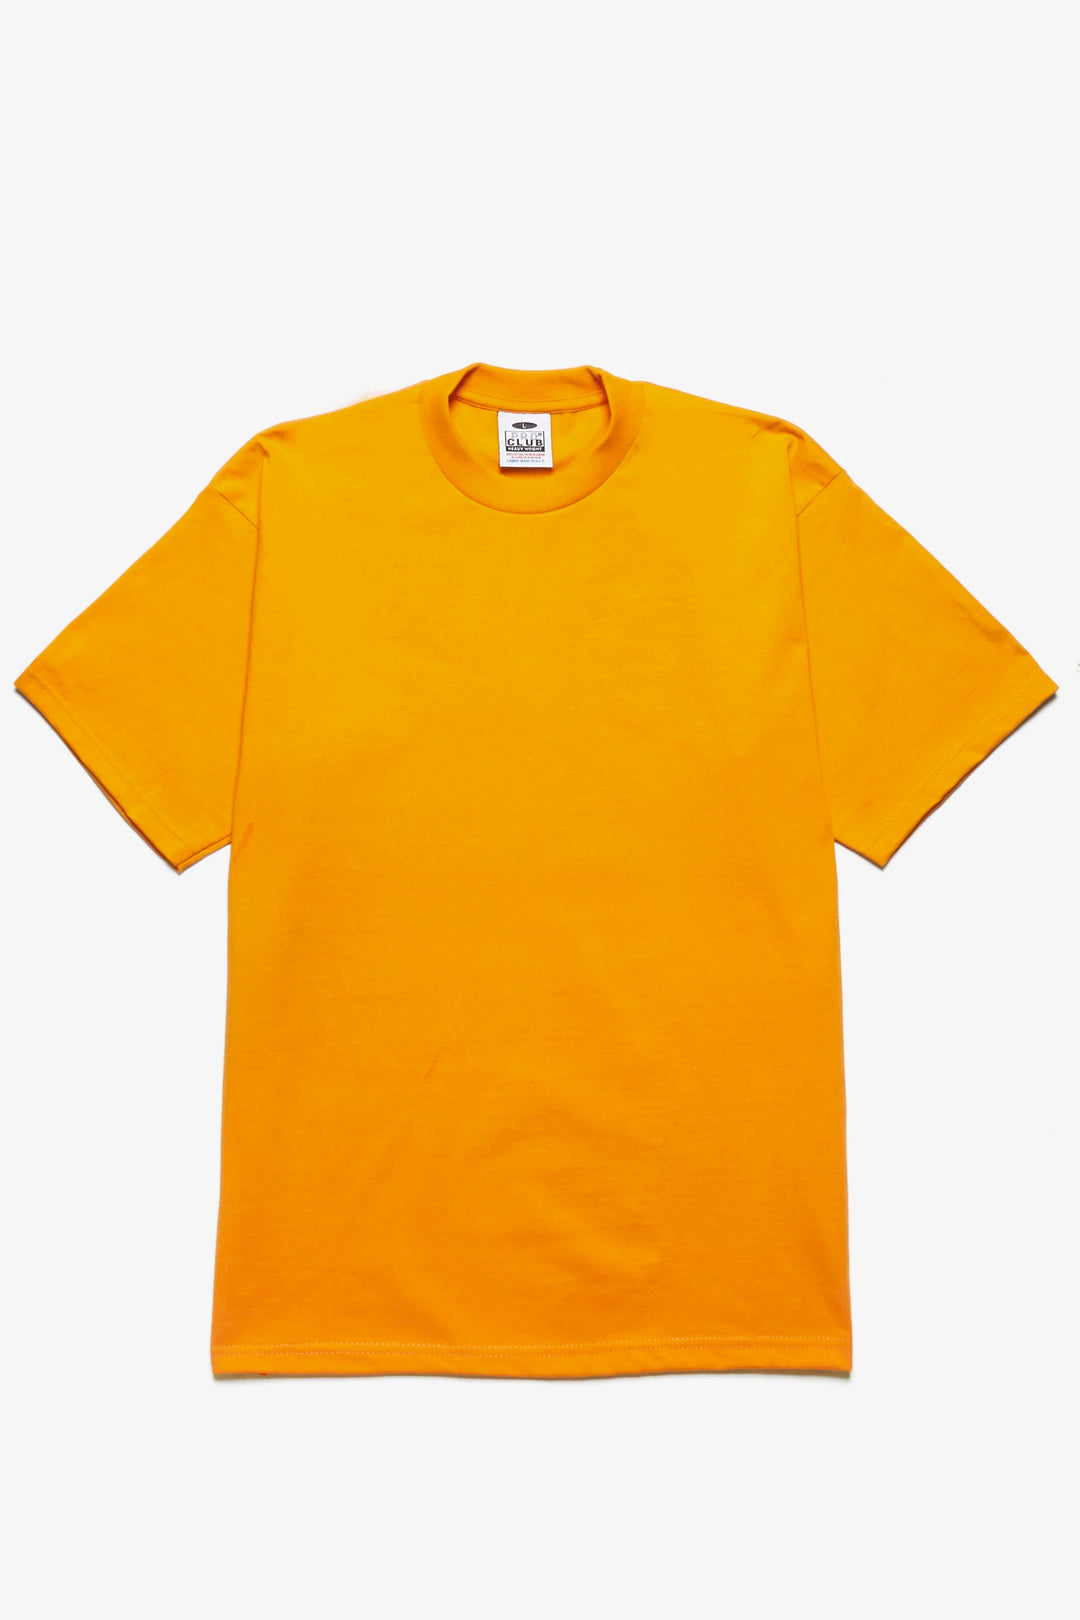 Pro Club - Heavyweight T-Shirt - Sunflower – Blacksmith Store